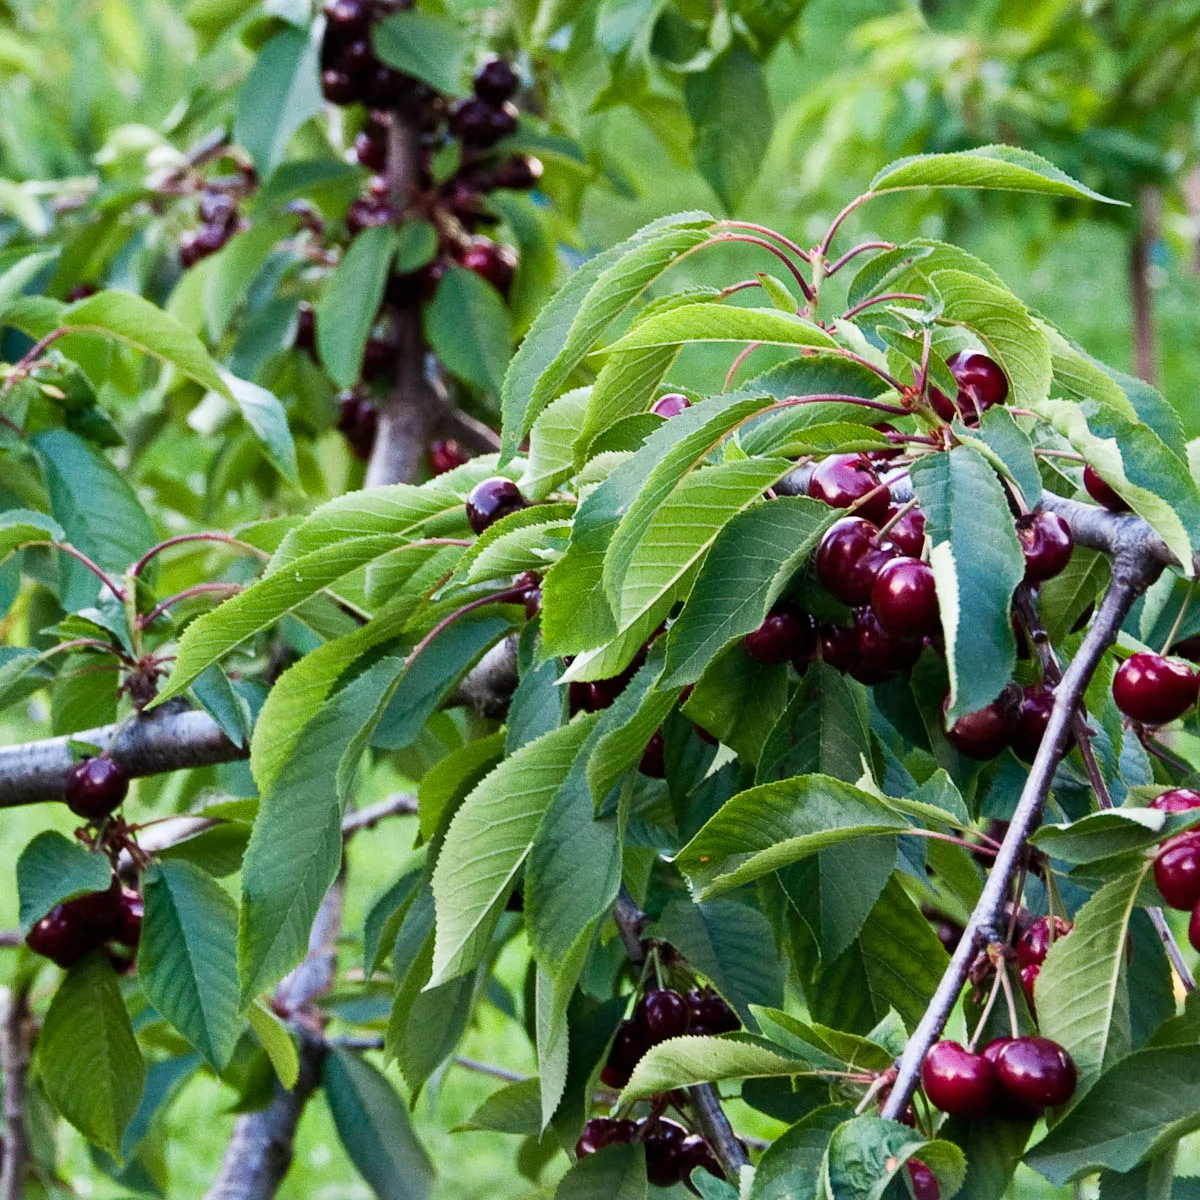 Cherries on a cherry tree, Festa dea Siaresa, Castegnero, Veneto, Italy - www.rossiwrites.com